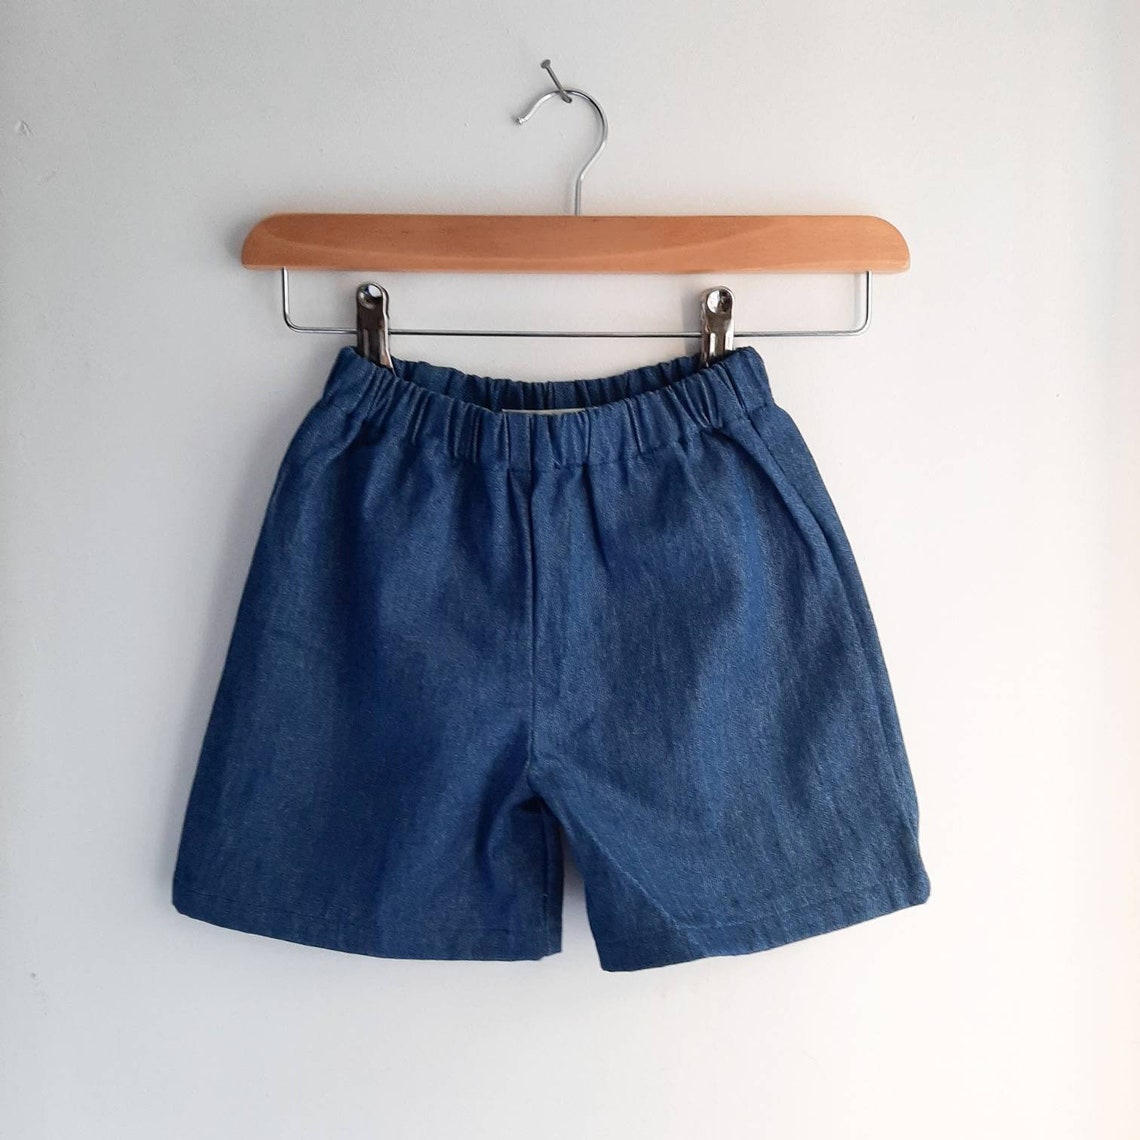 Blue denim jinbei top & shorts set | Etsy